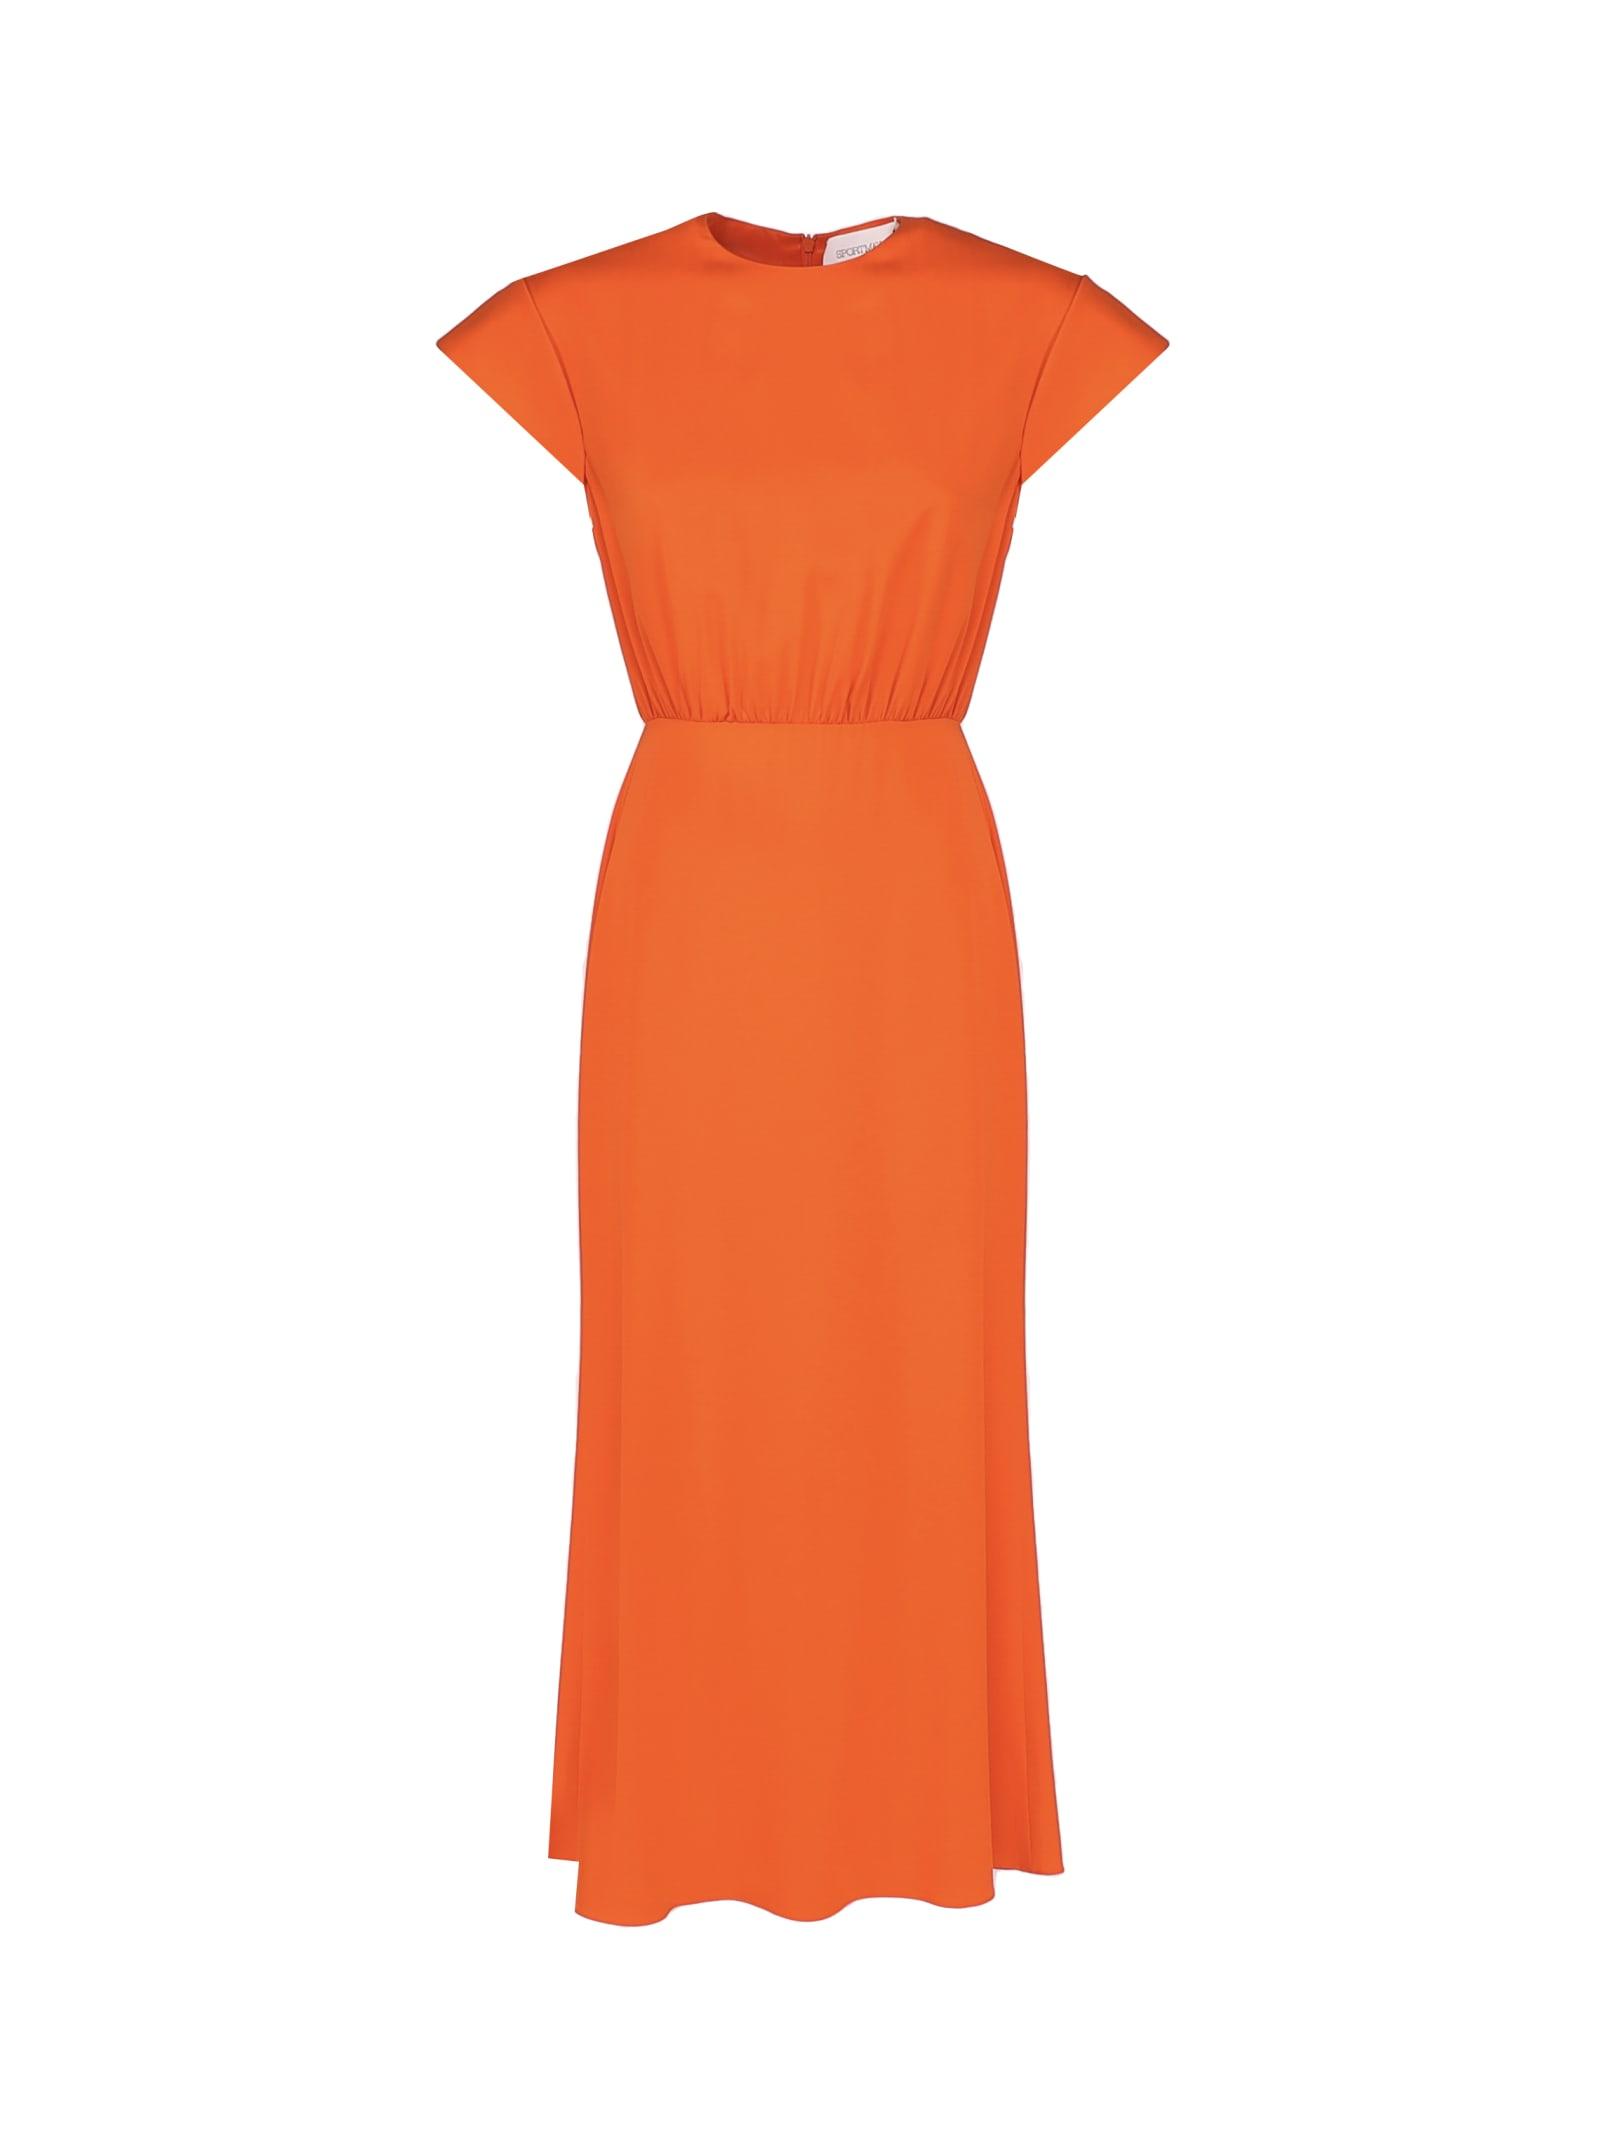 Max Mara Dress With Cap Sleeves in Orange | Lyst